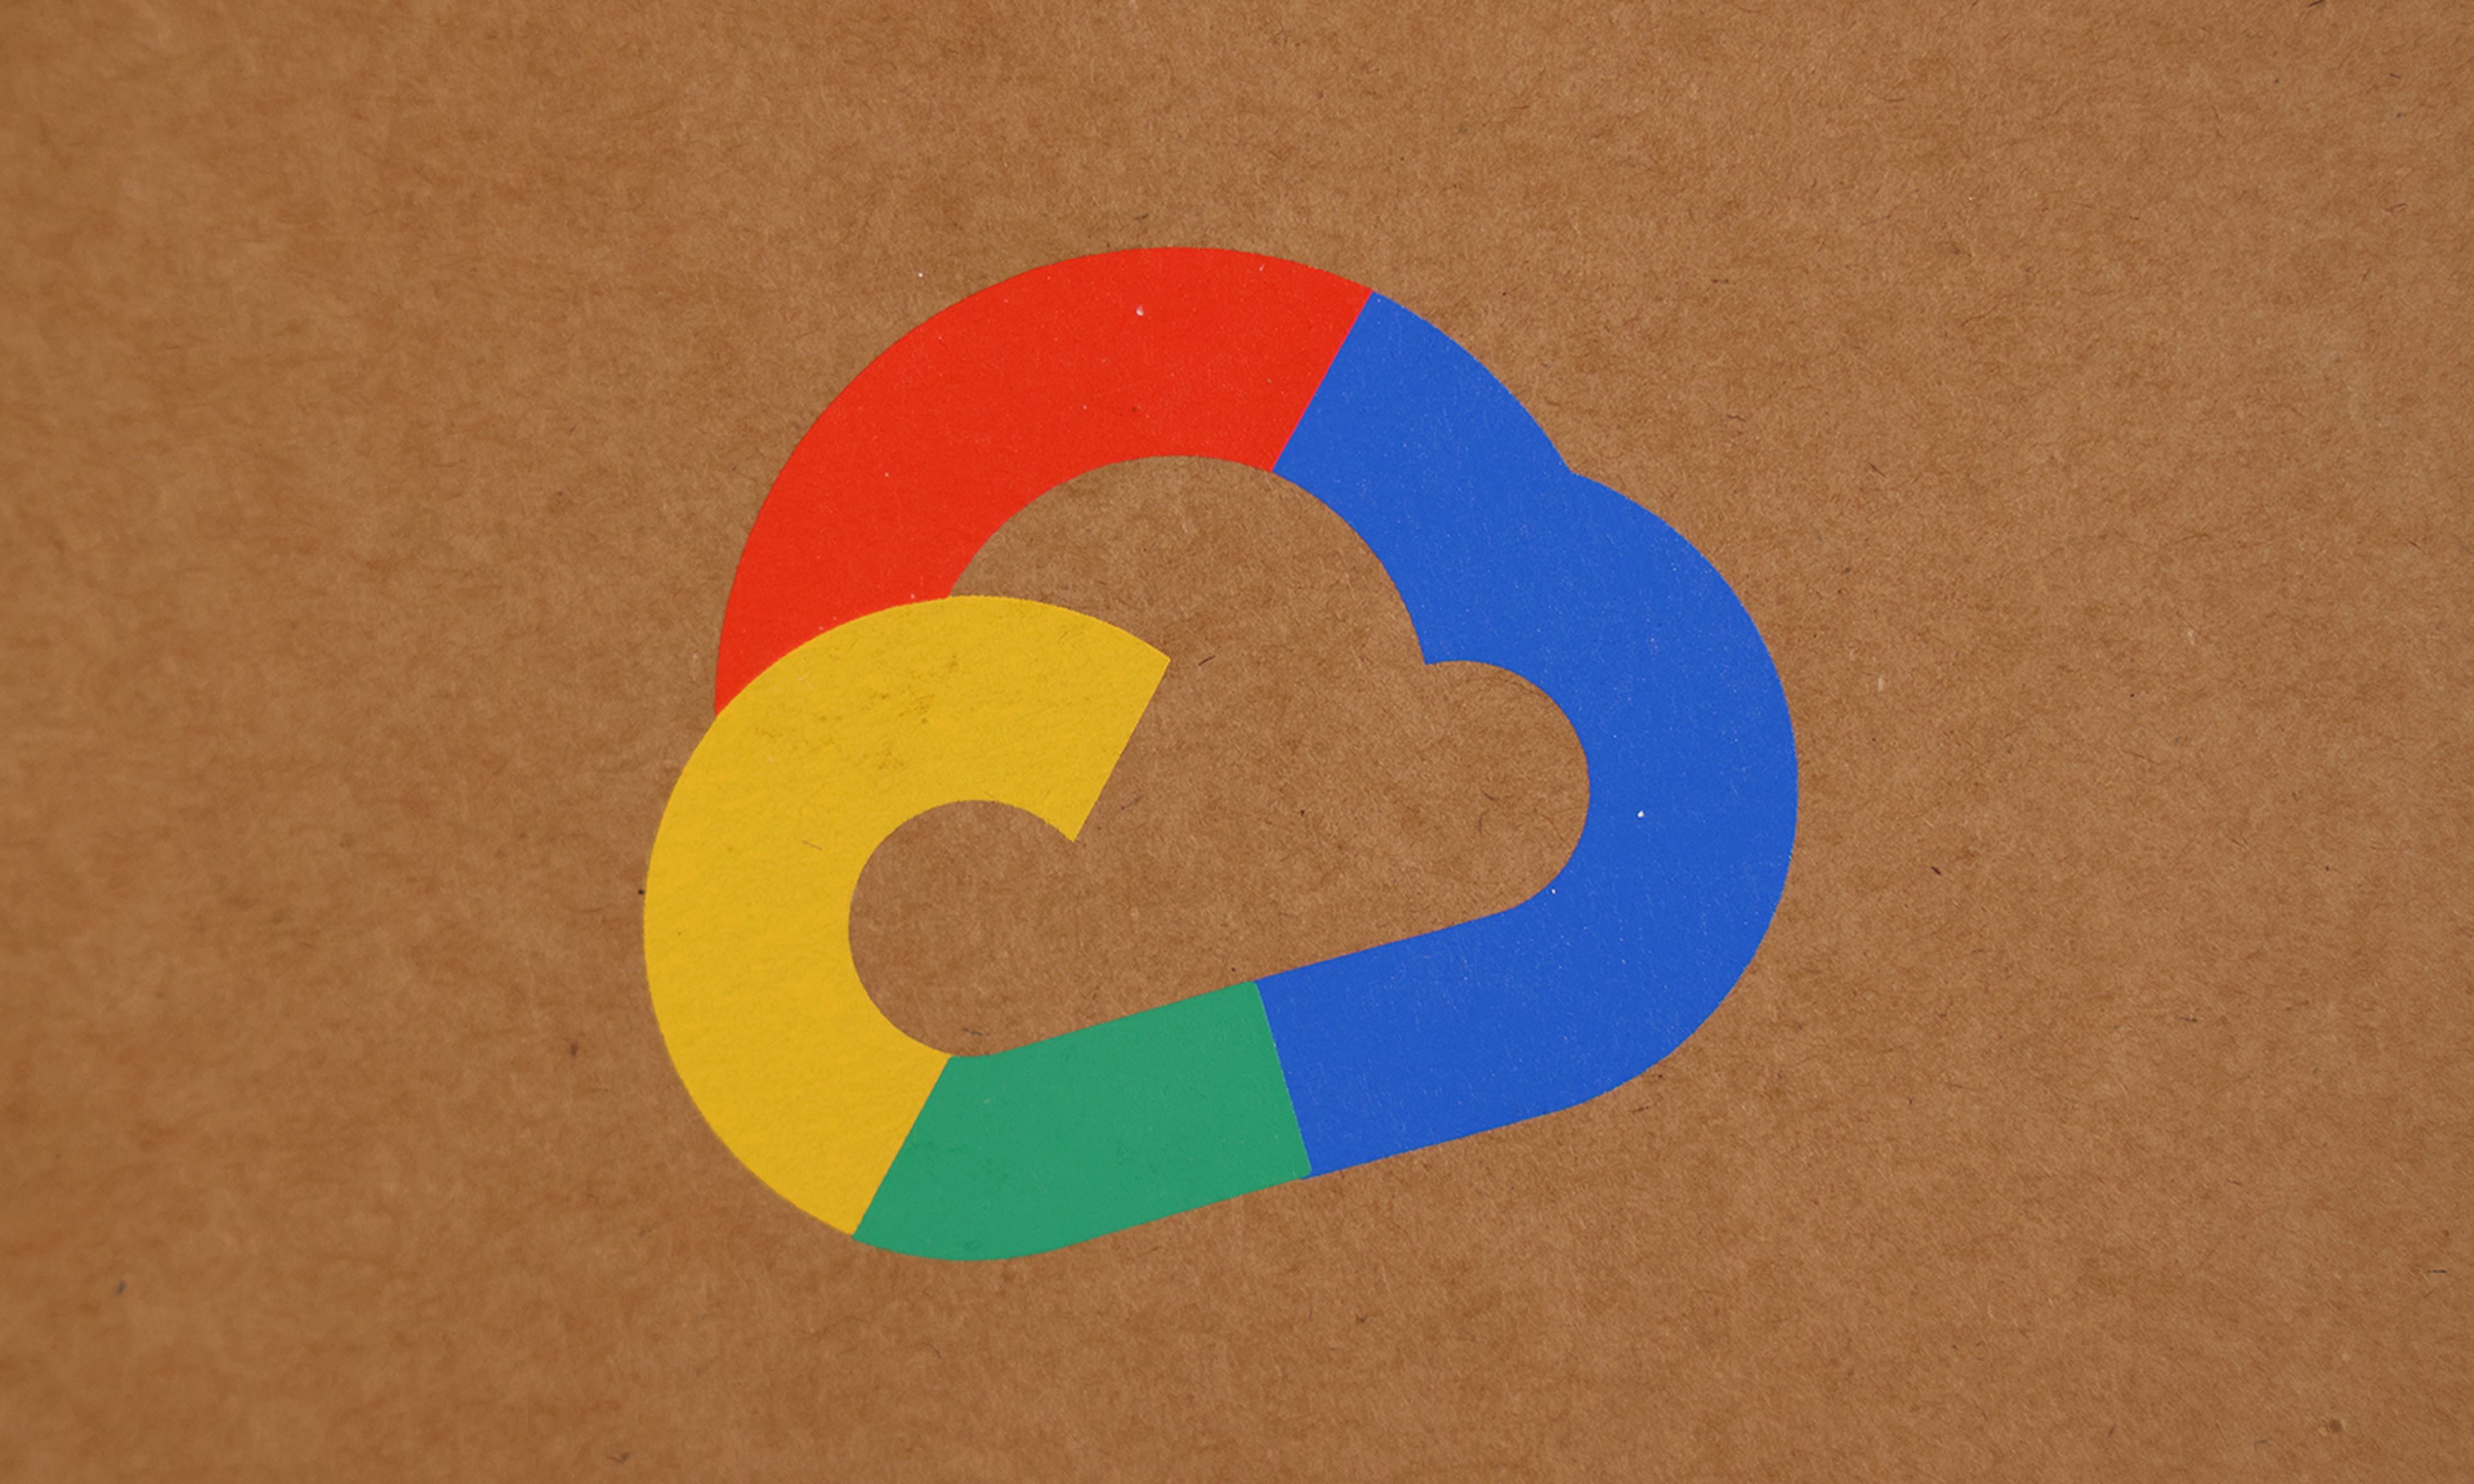 A multi-colored Google Cloud logo is seen